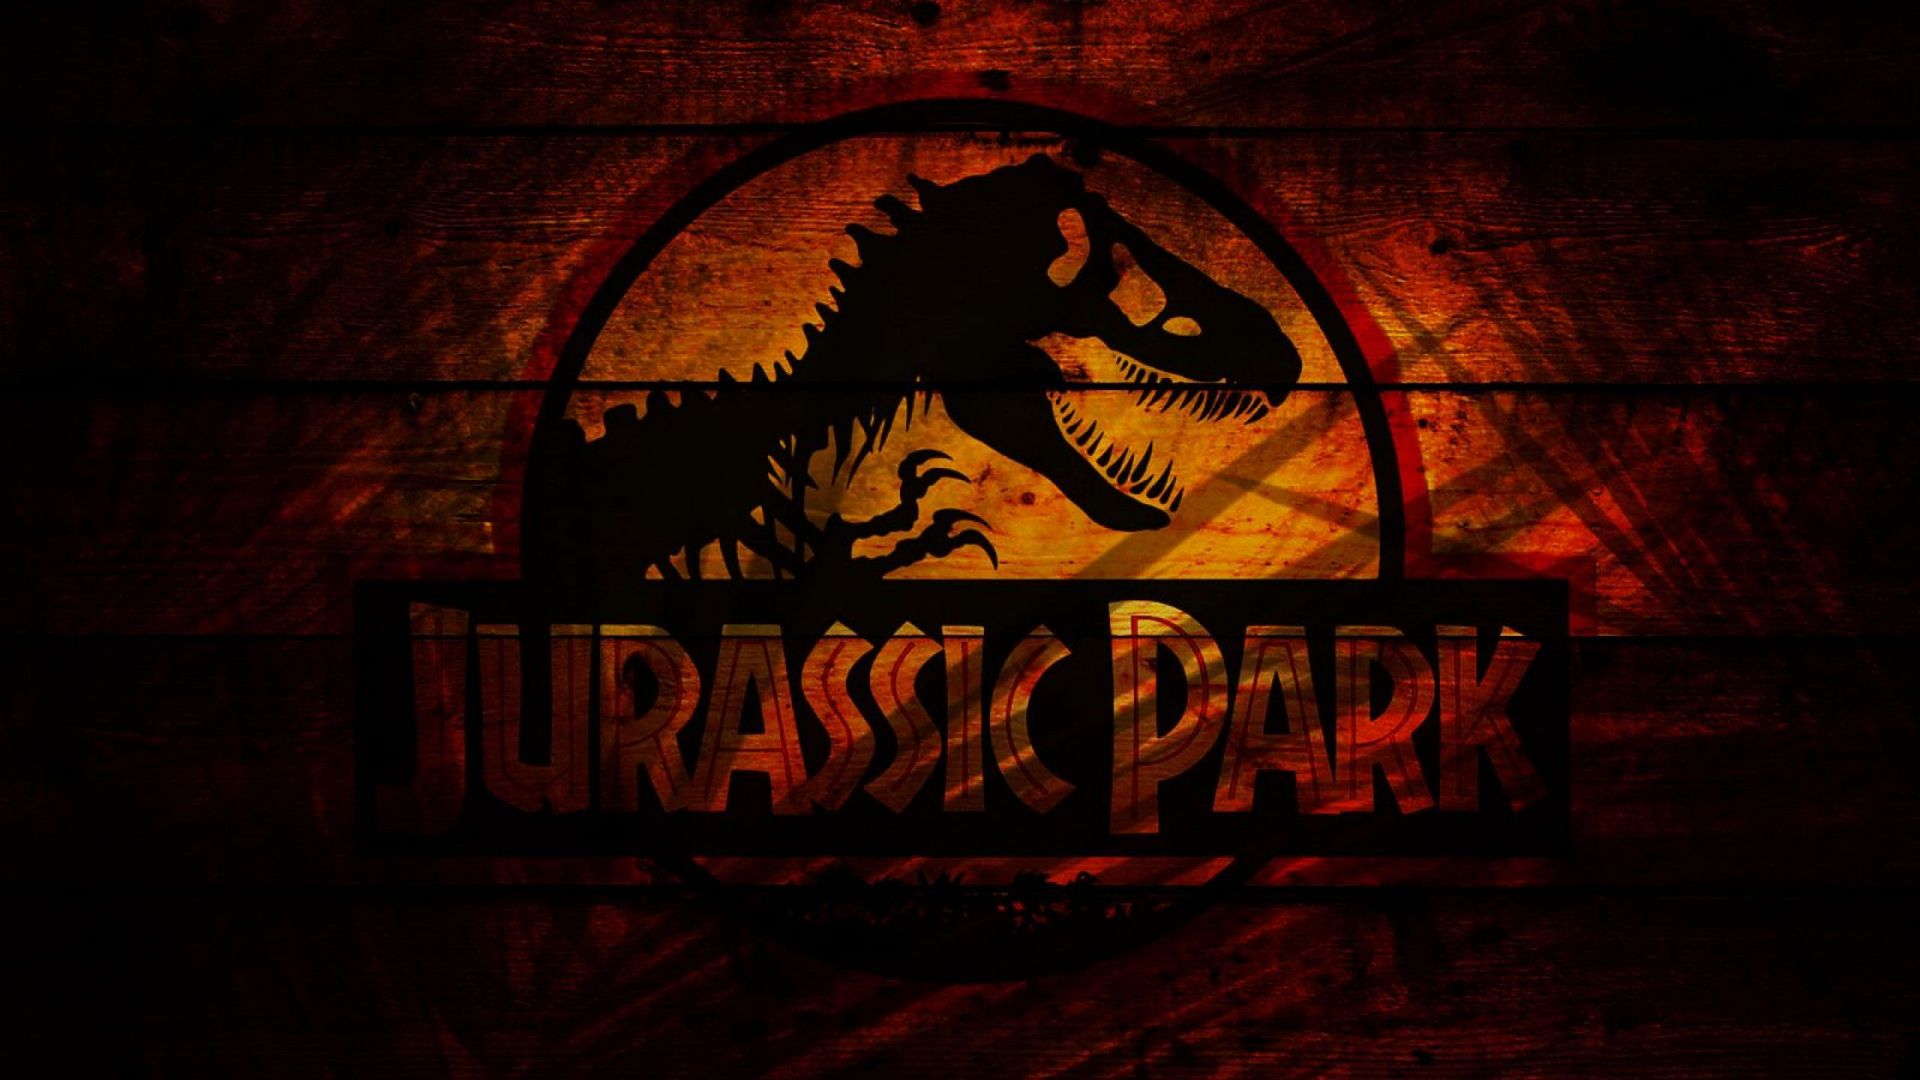 Jurassic Park download